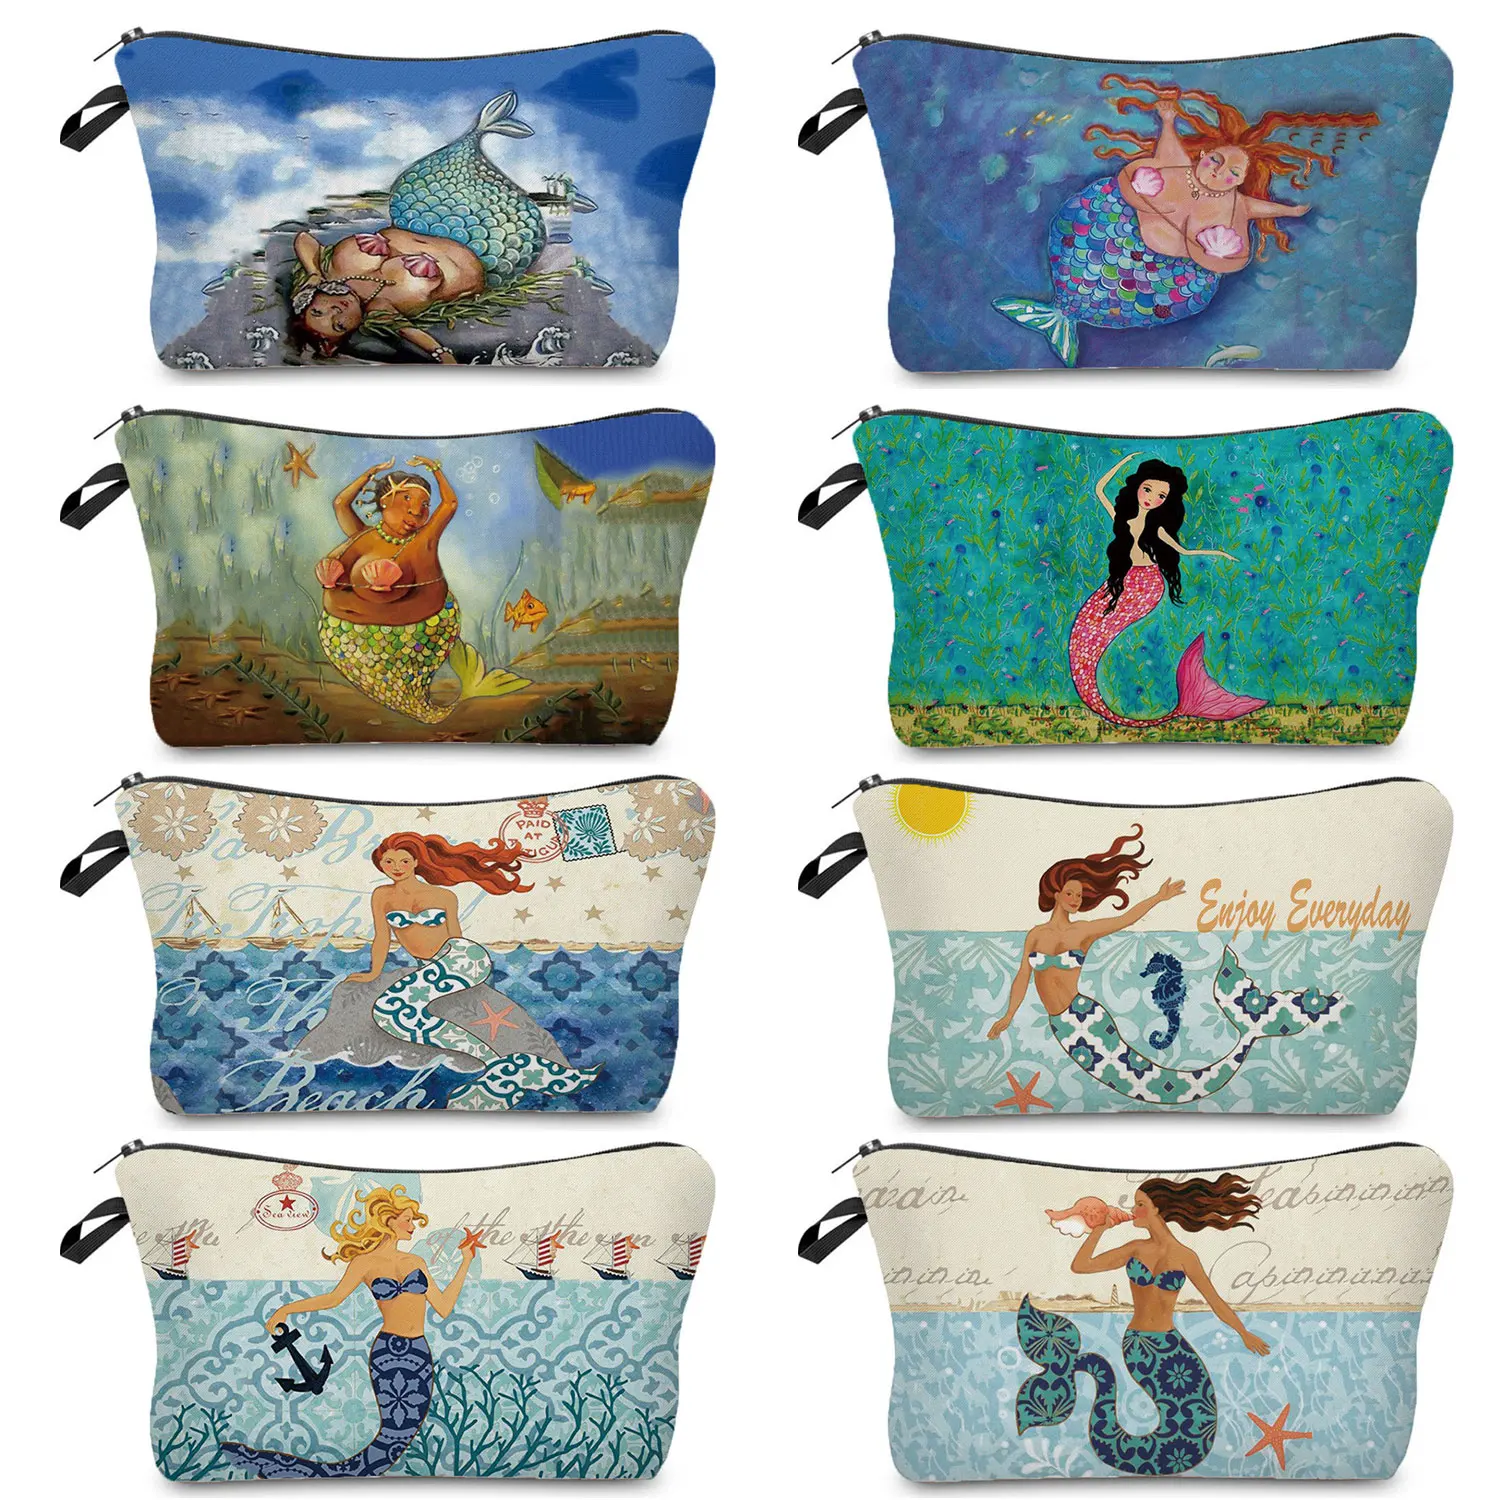 

Fashion New Women Canvas Makeup Bags Cartoon Mermaid Print Travel Cosmetic Bag Toiletries Organizer Storage Neceser Pouch Bags